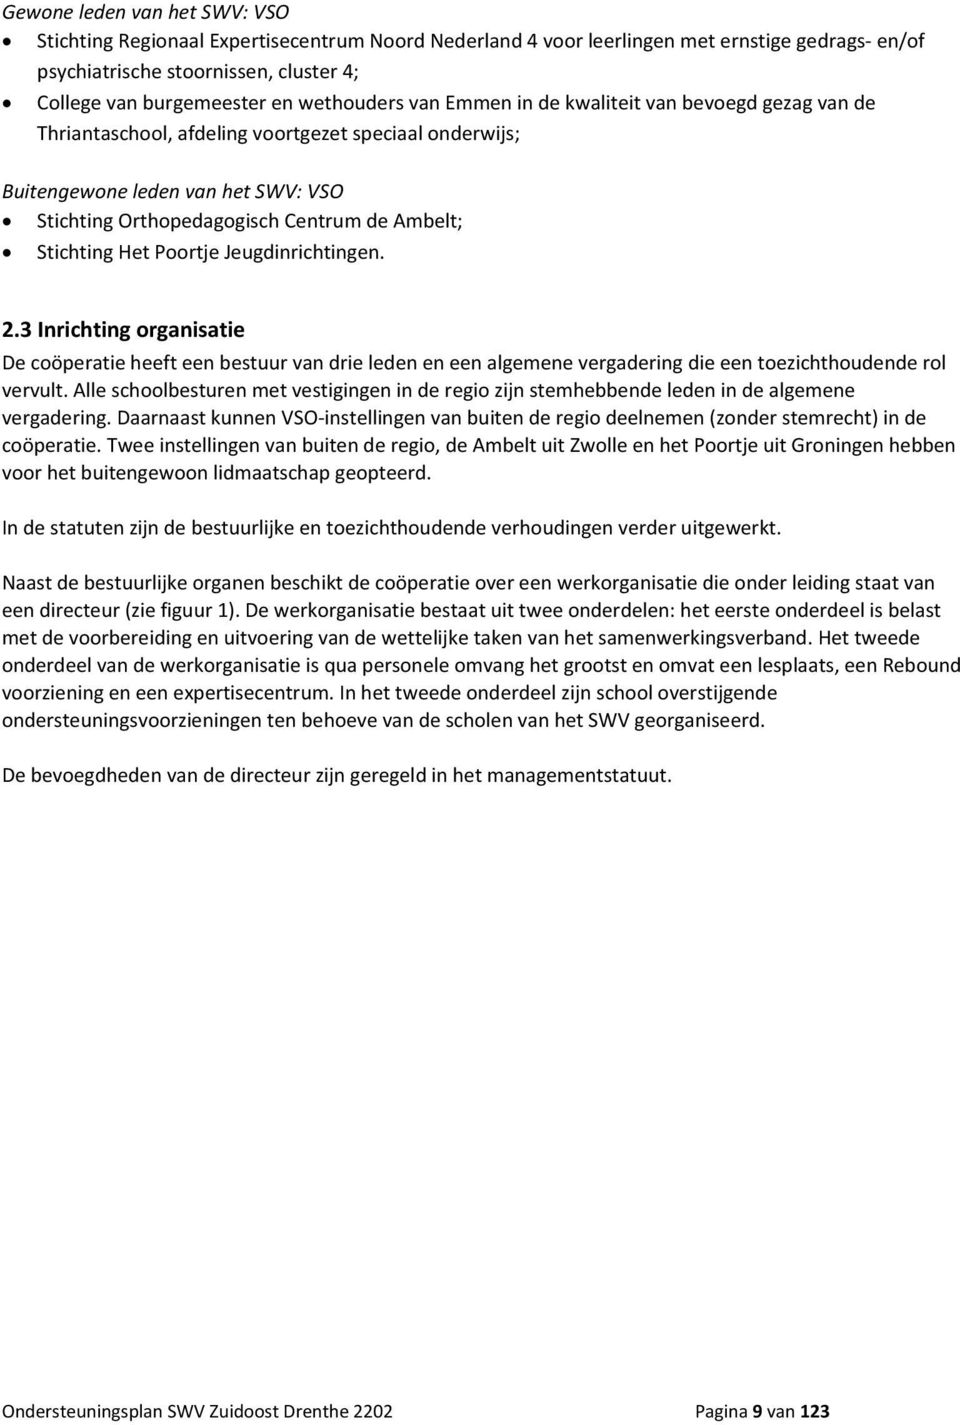 StichtingOrthopedagogischCentrumdeAmbelt; StichtingHetPoortjeJeugdinrichtingen. 2.